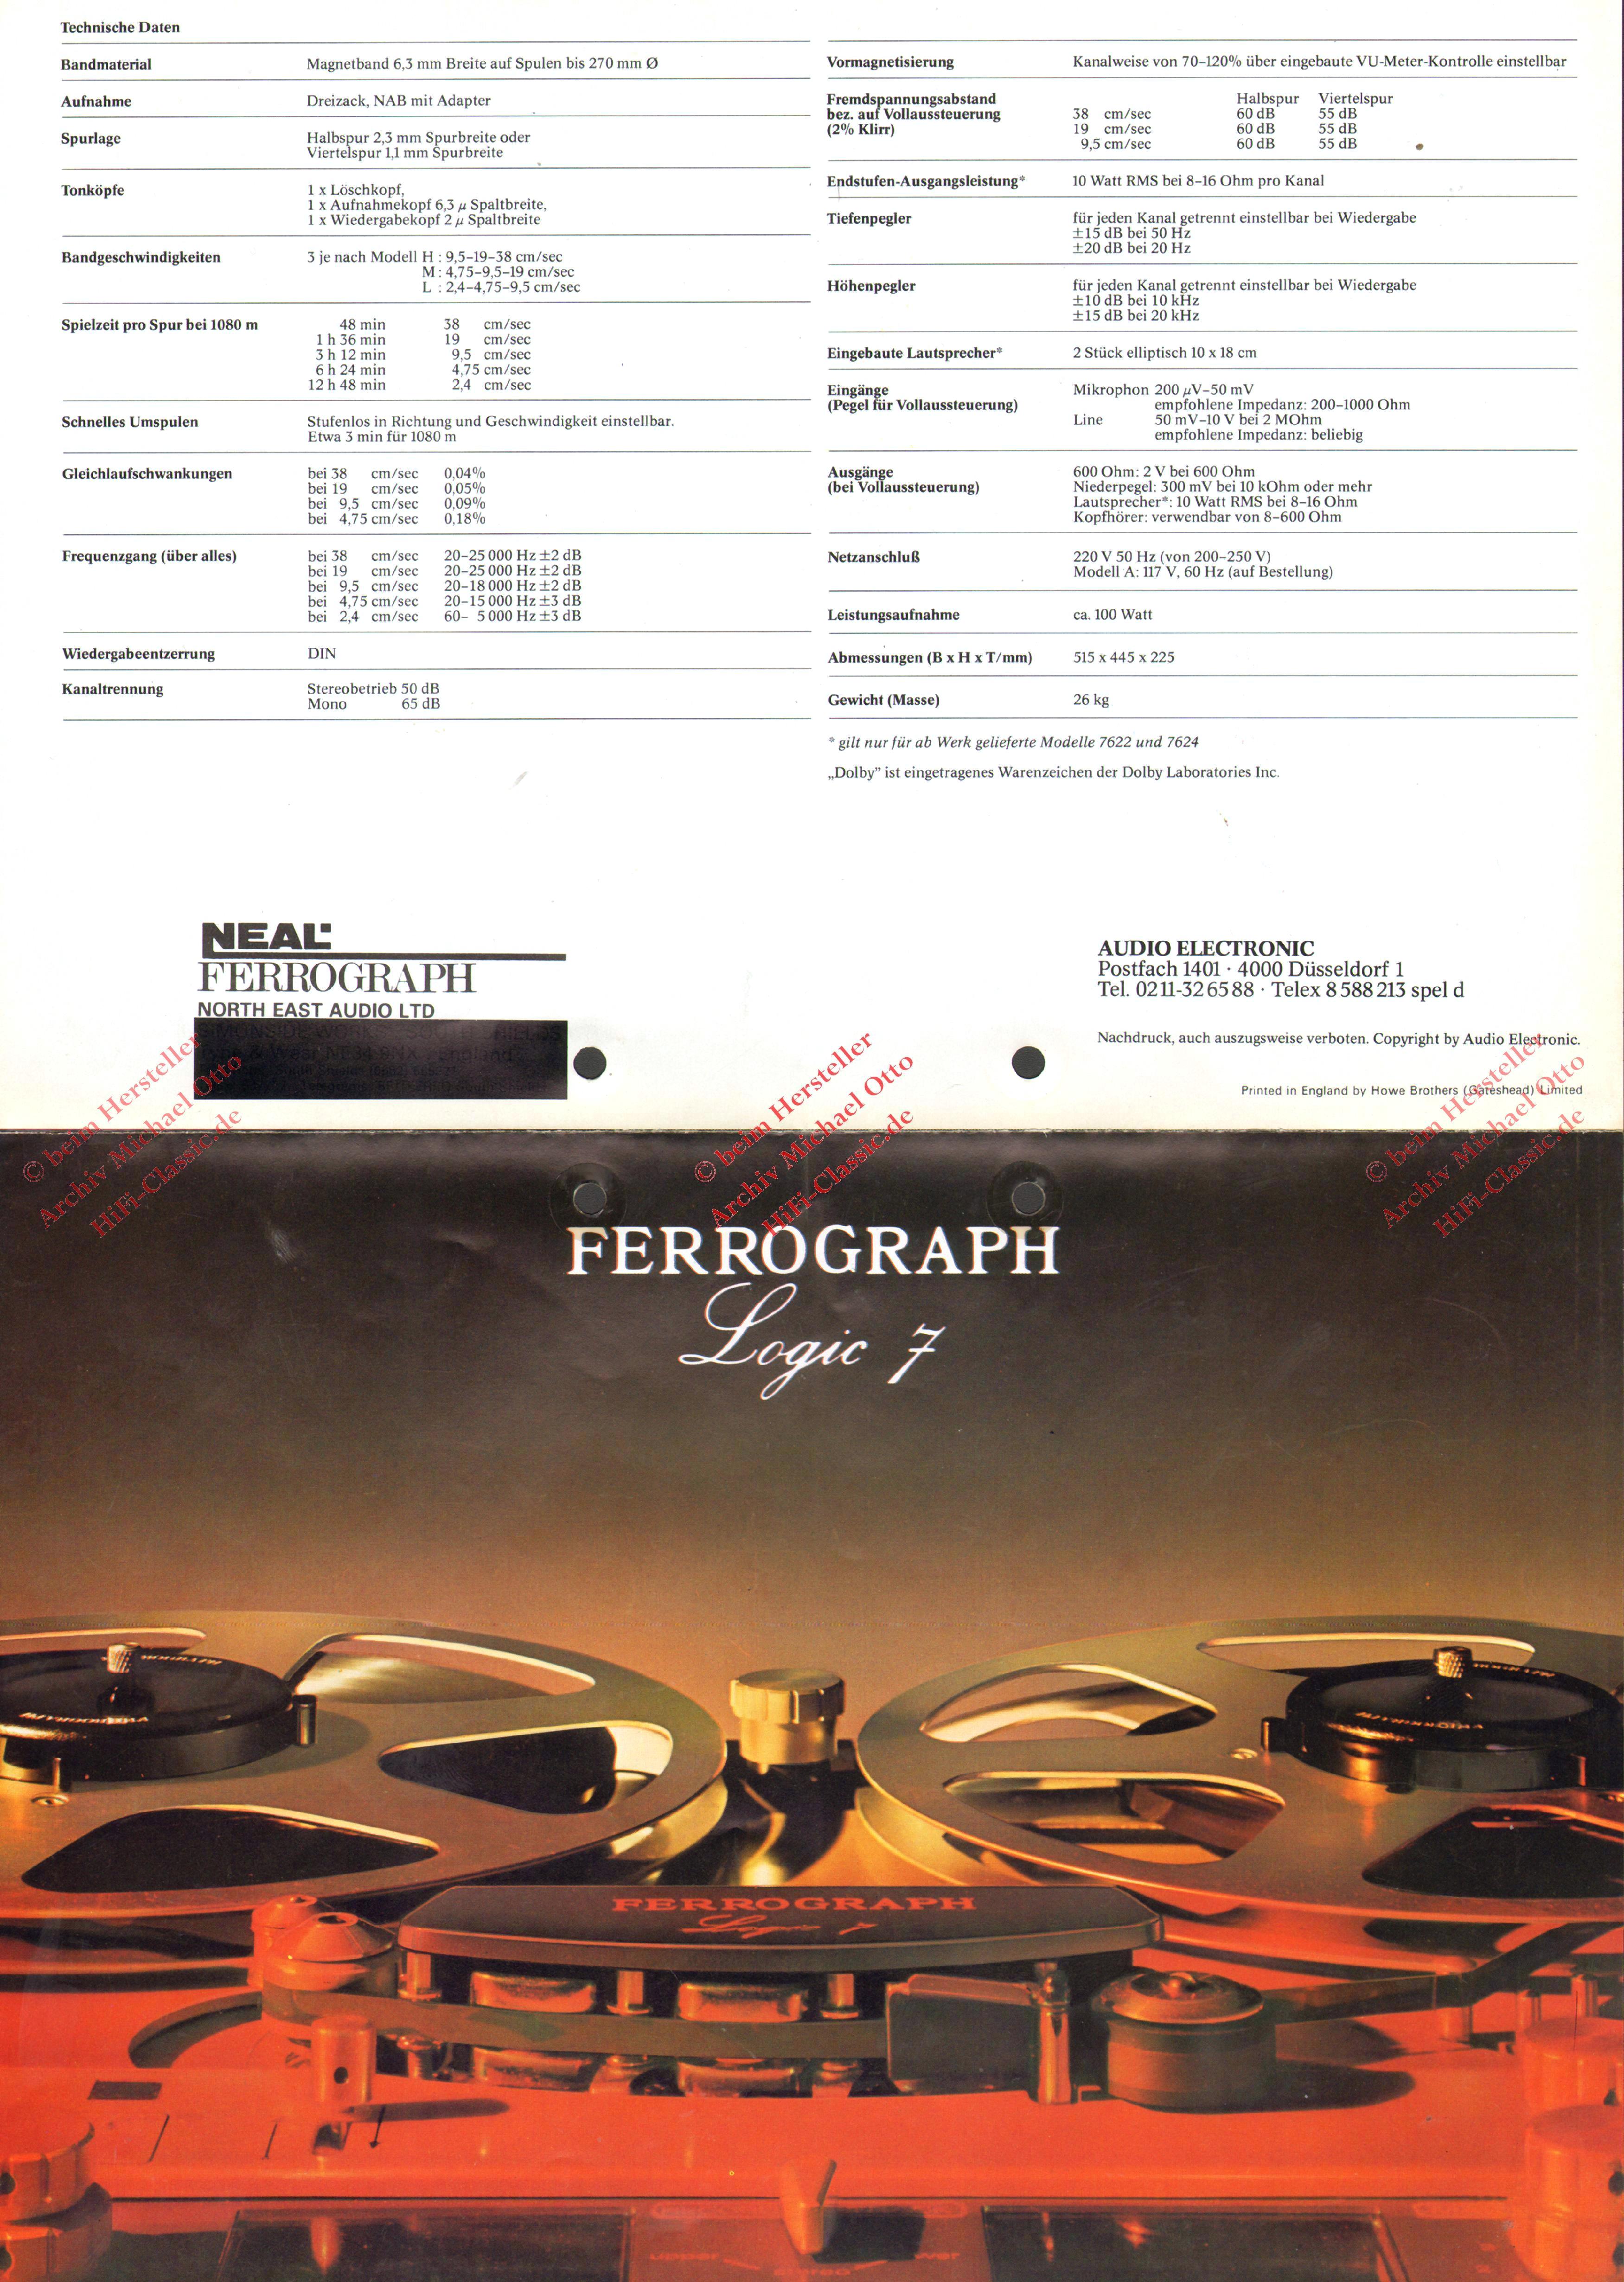 Ferrograph Logic-7 flyer